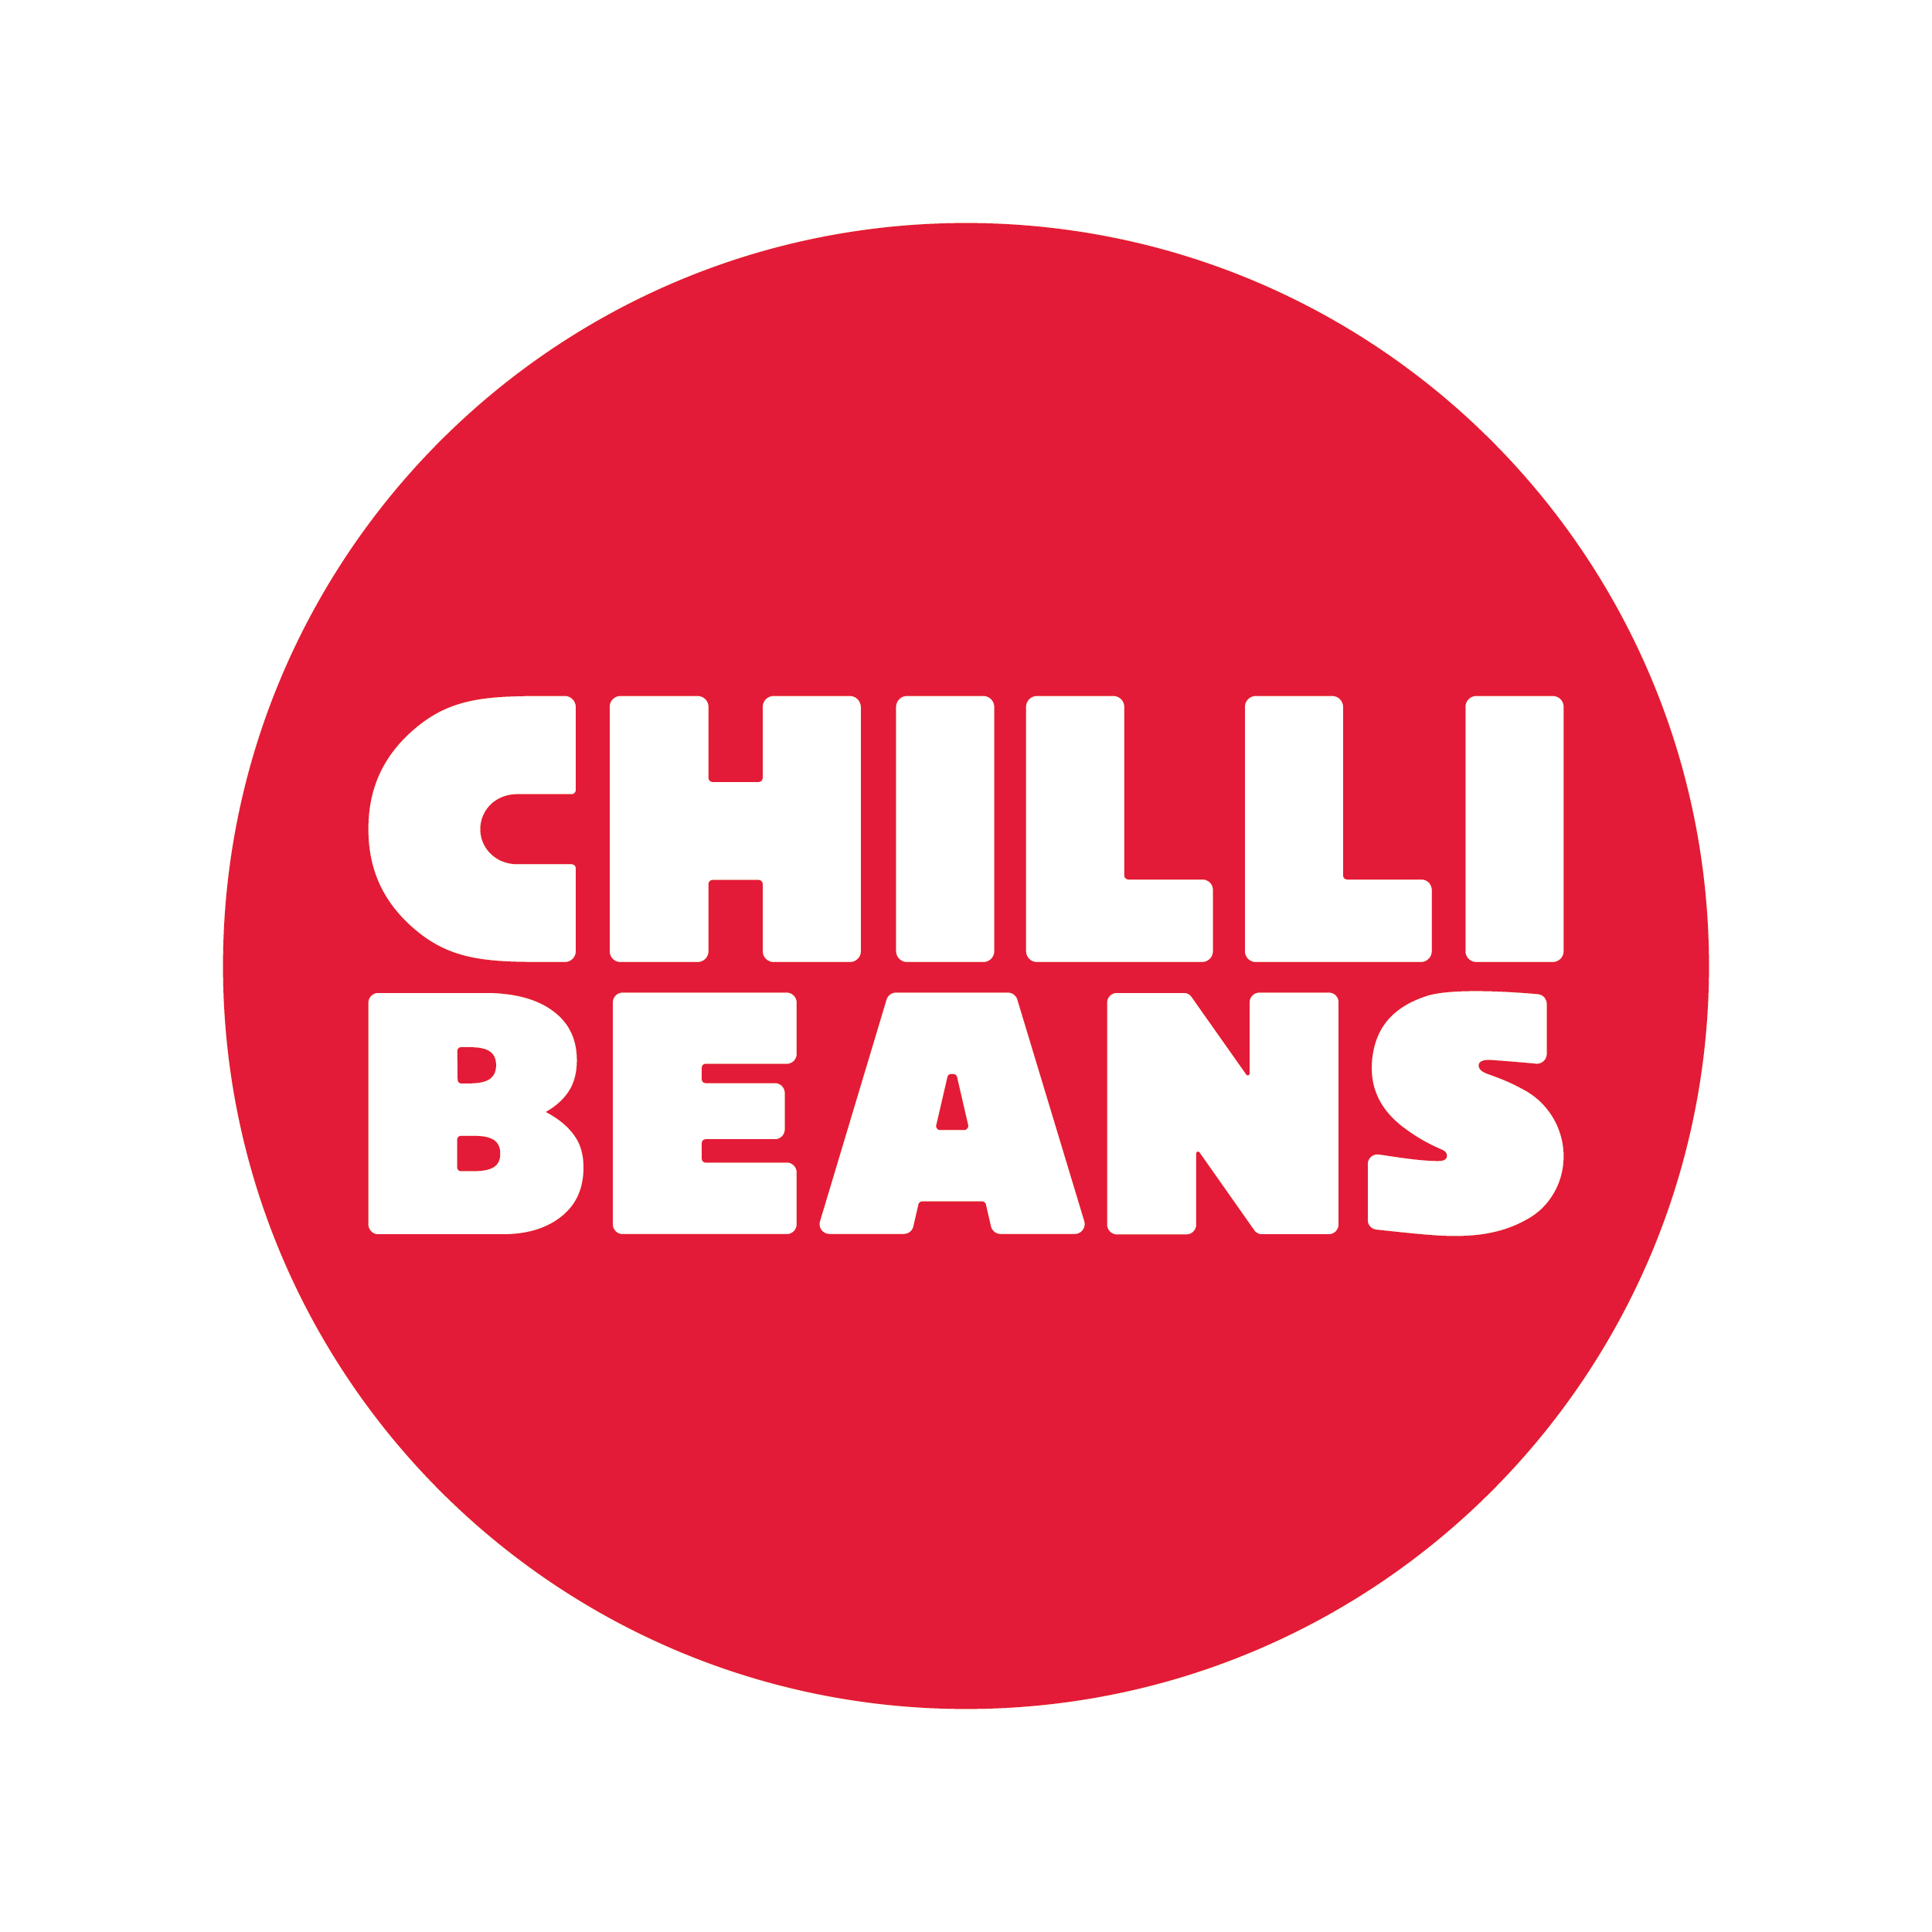 Logo Chilli Beans